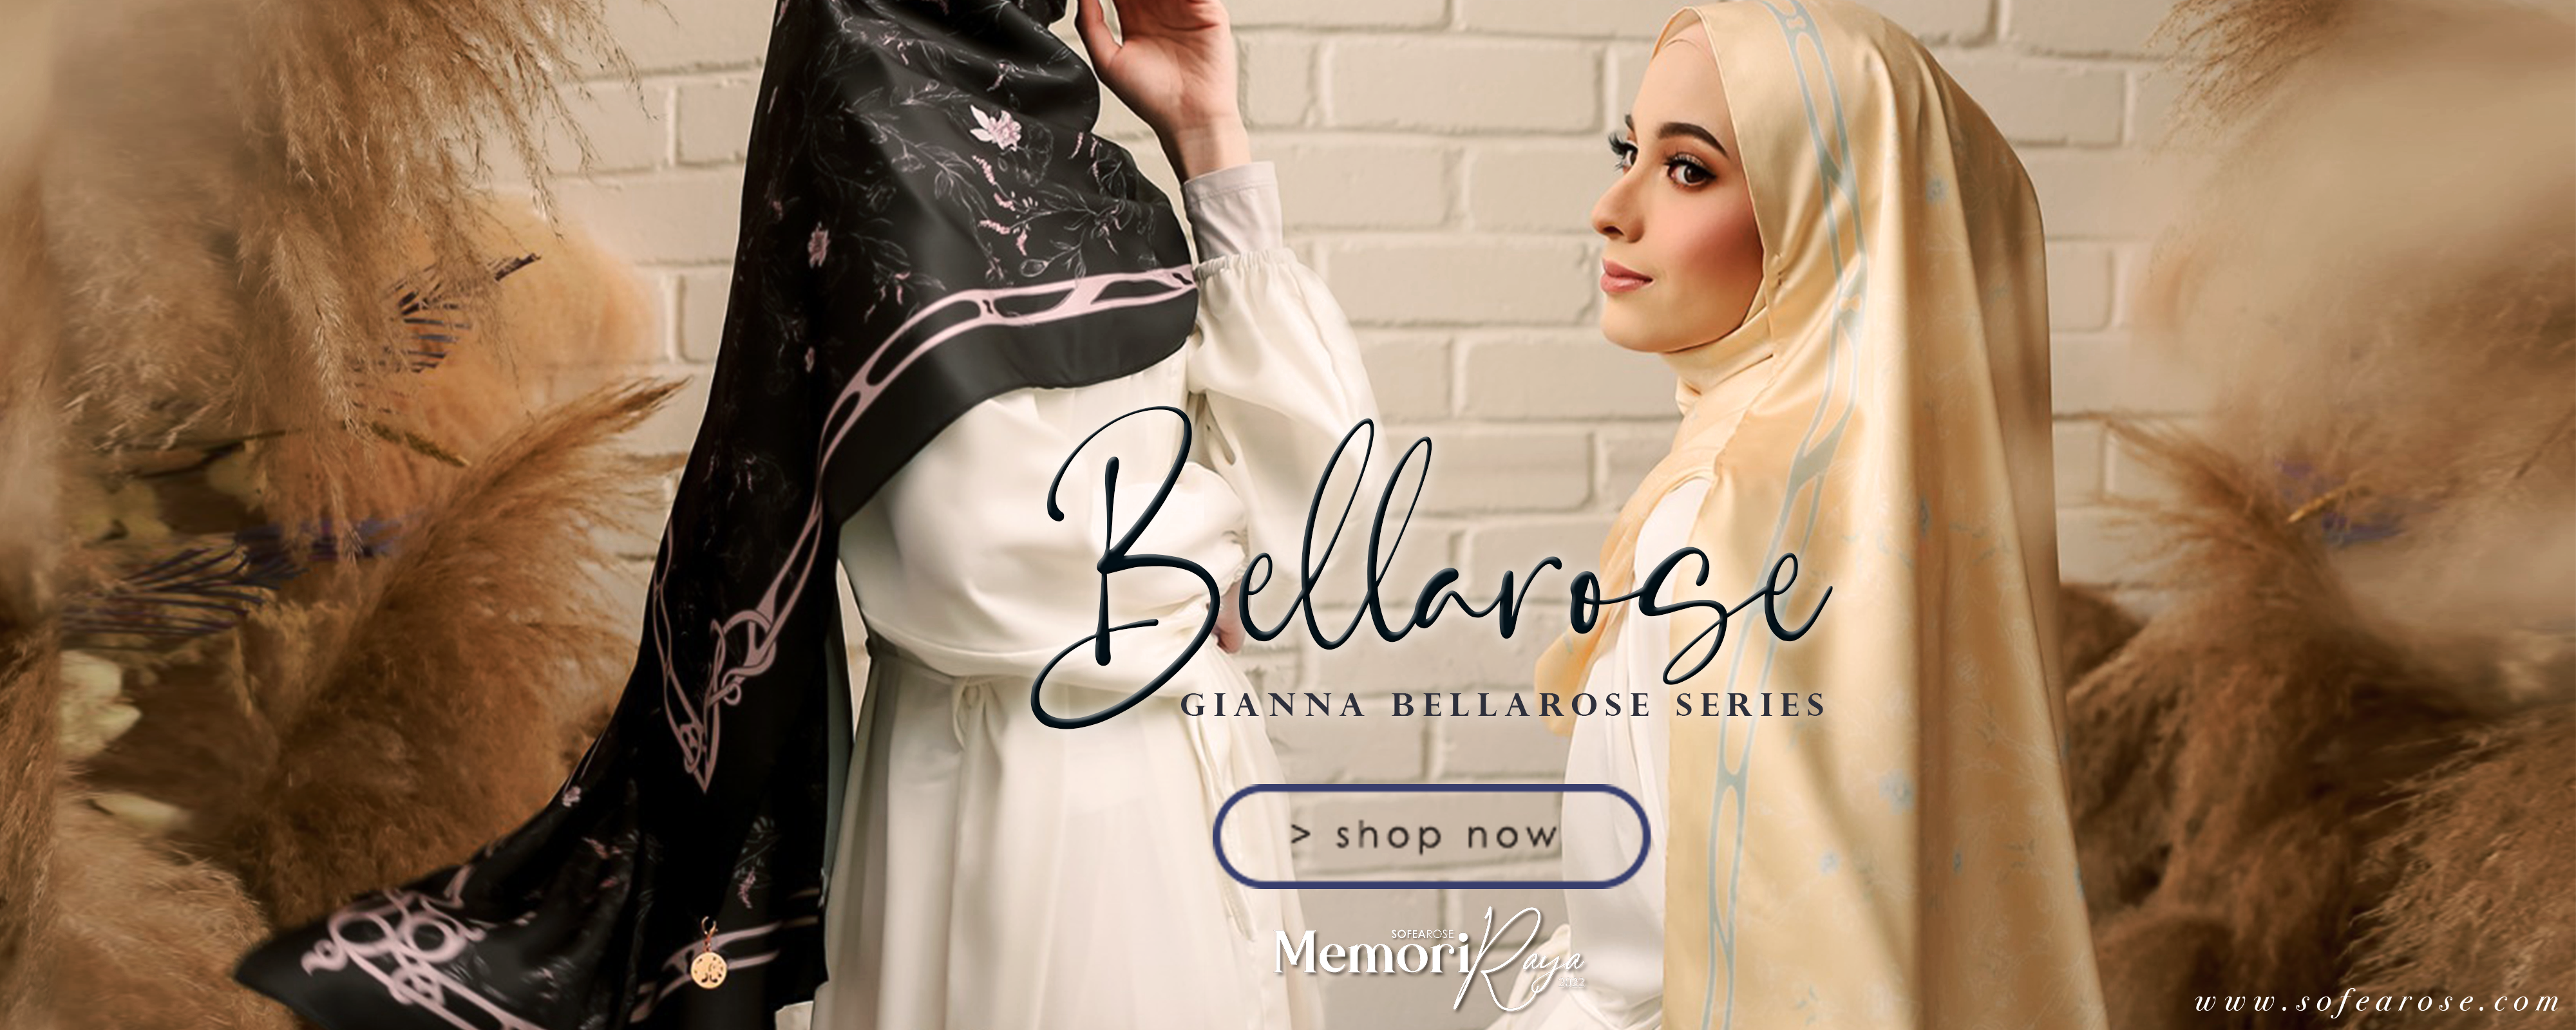 gianna bellarose website